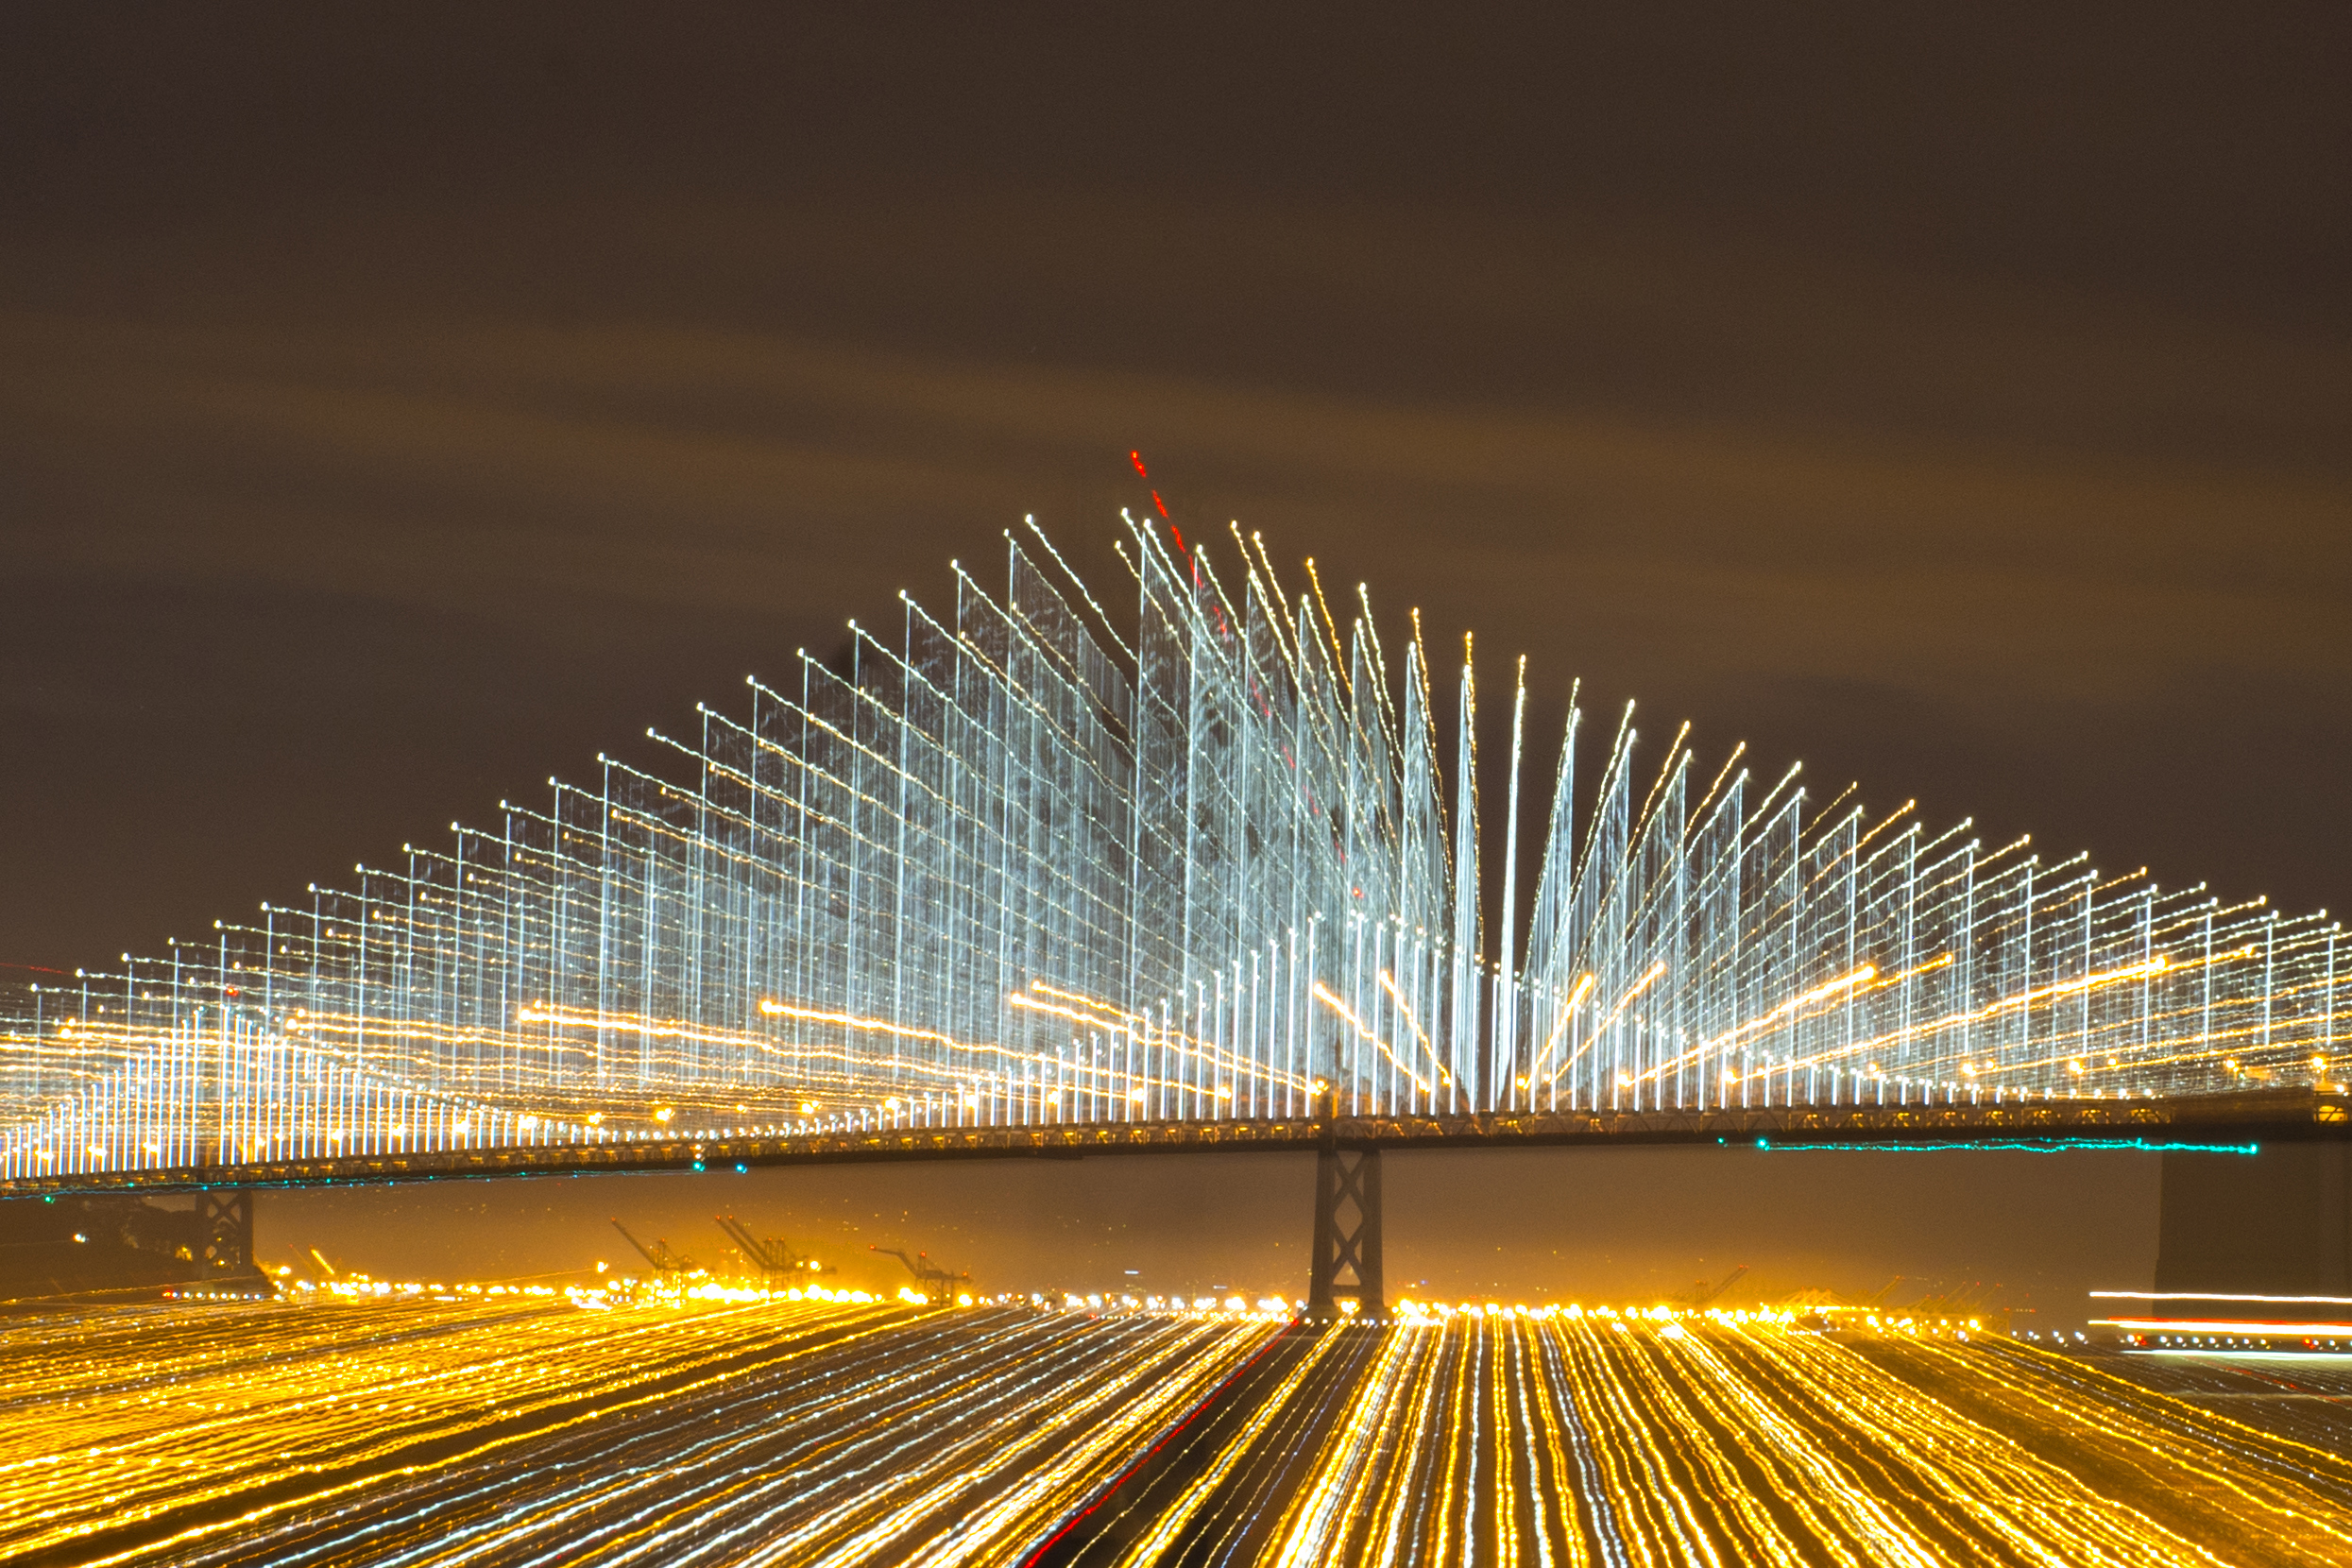 A light show illuminating cables on a suspension bridge shine at night.